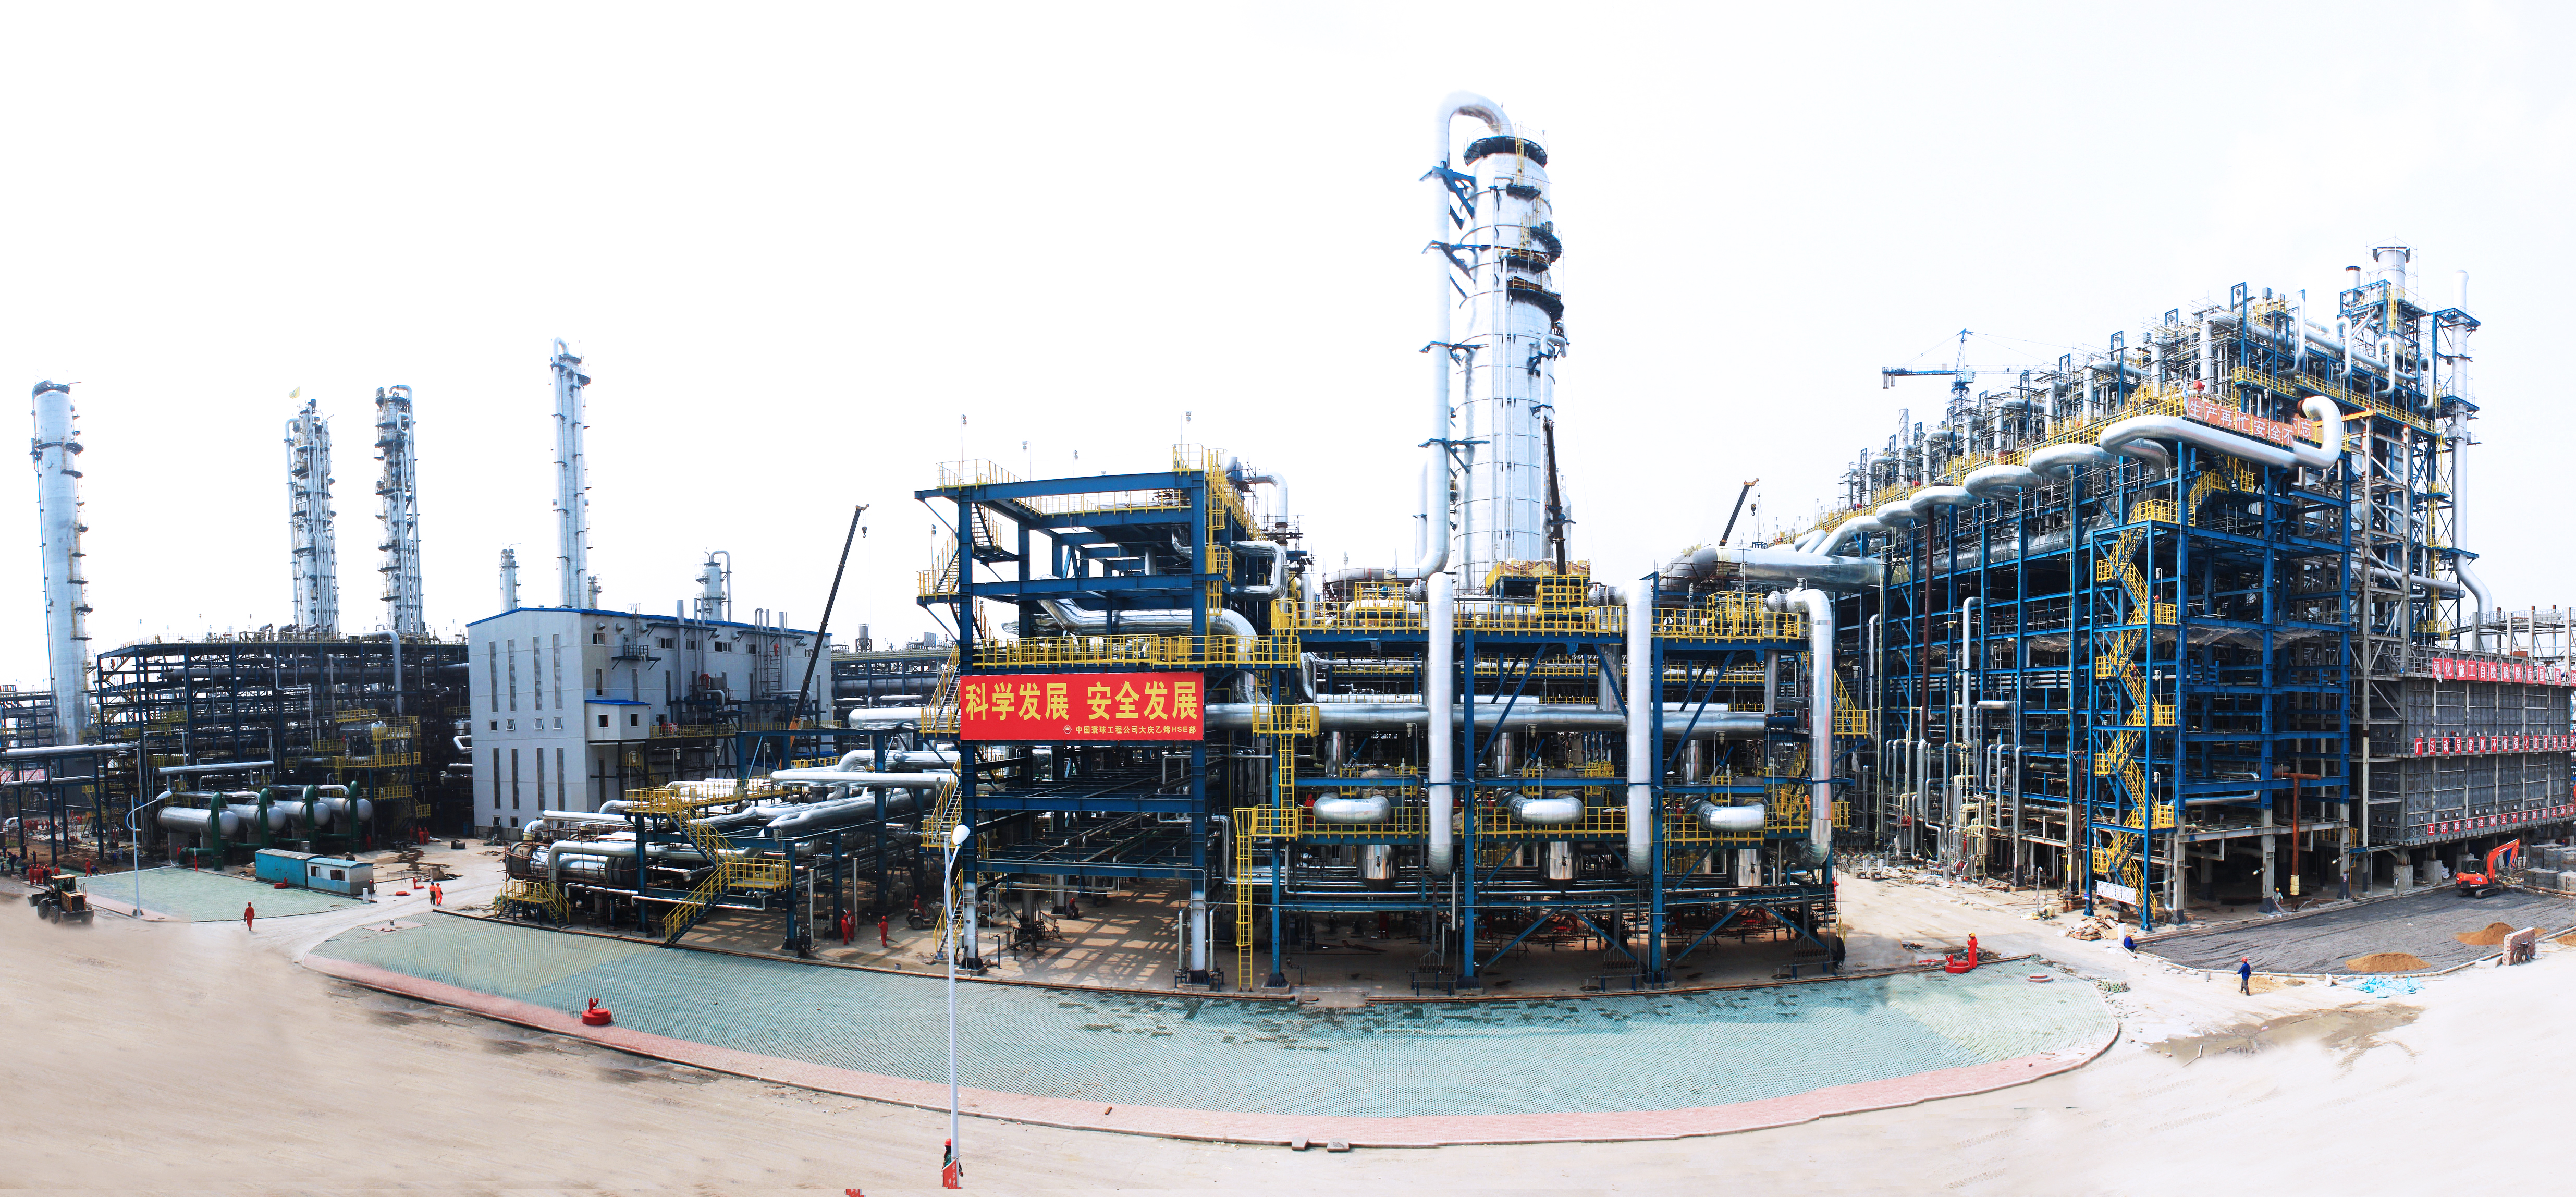 Daqing Petrochemical Co. Ethylene Project